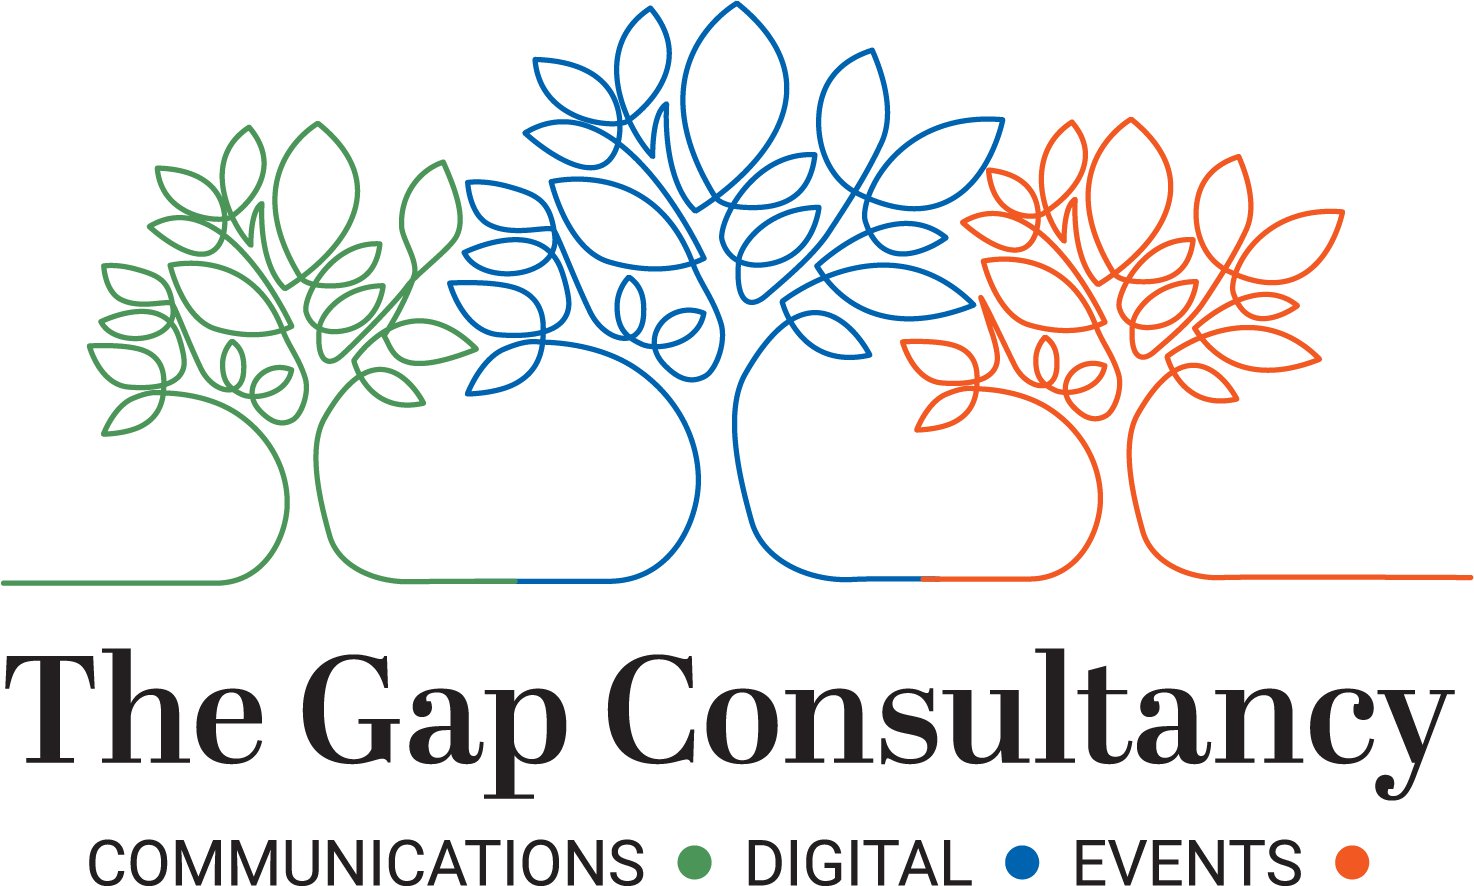 The Gap Consultancy